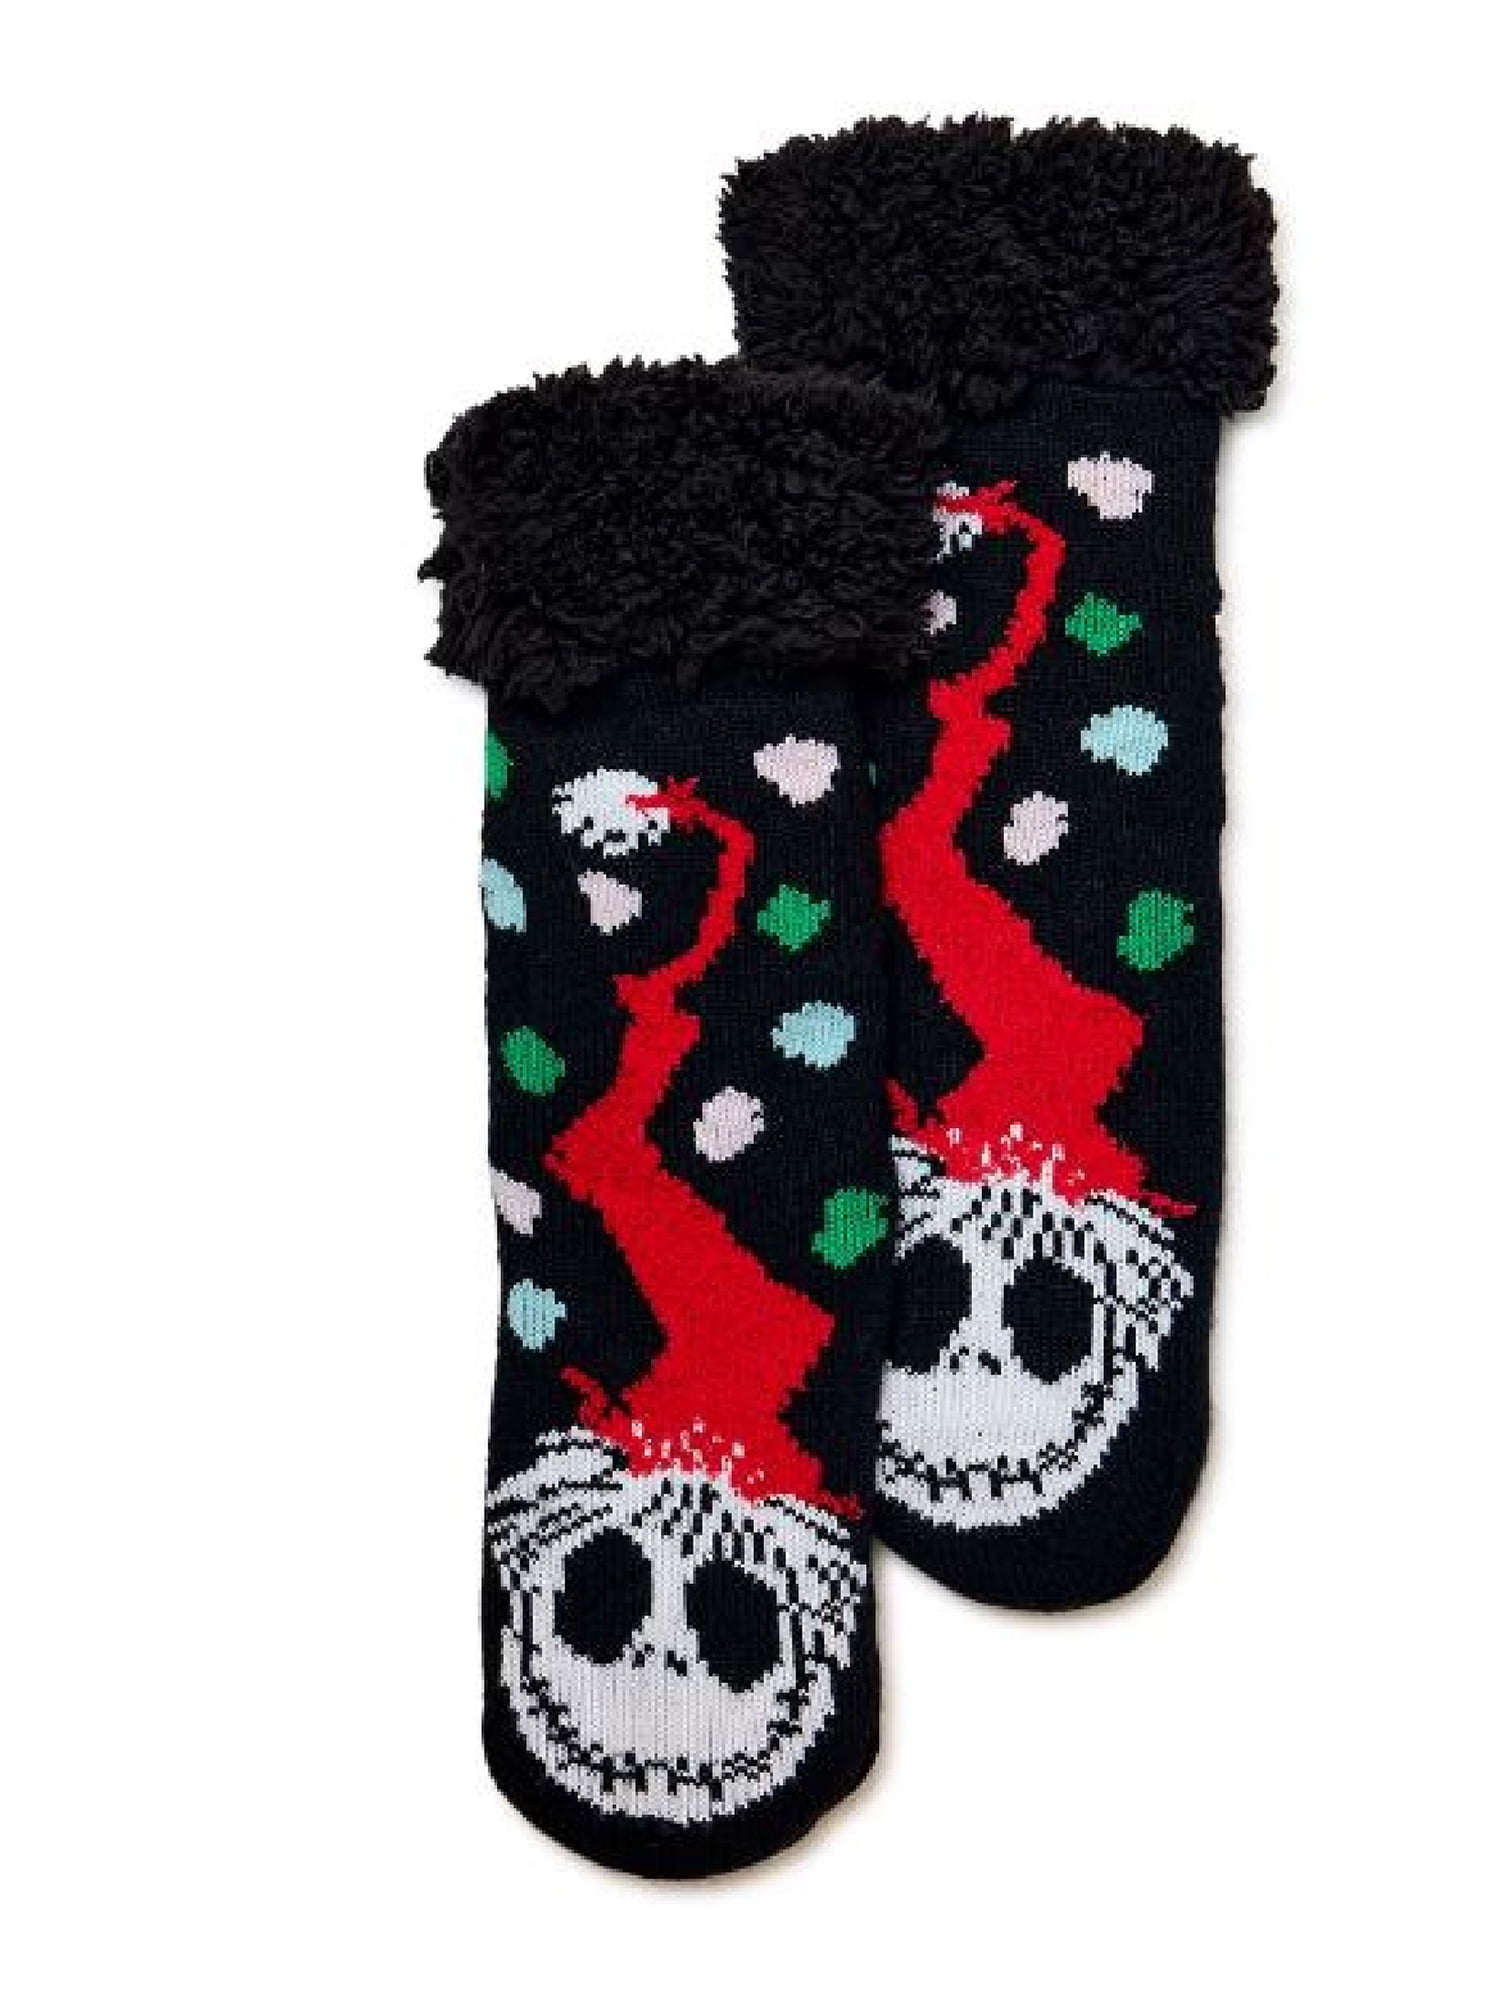 The Nightmare Before Christmas Disney Nightmare Before Christmas, Holiday Women's Slipper Socks, 1-Pack, Size 4-10